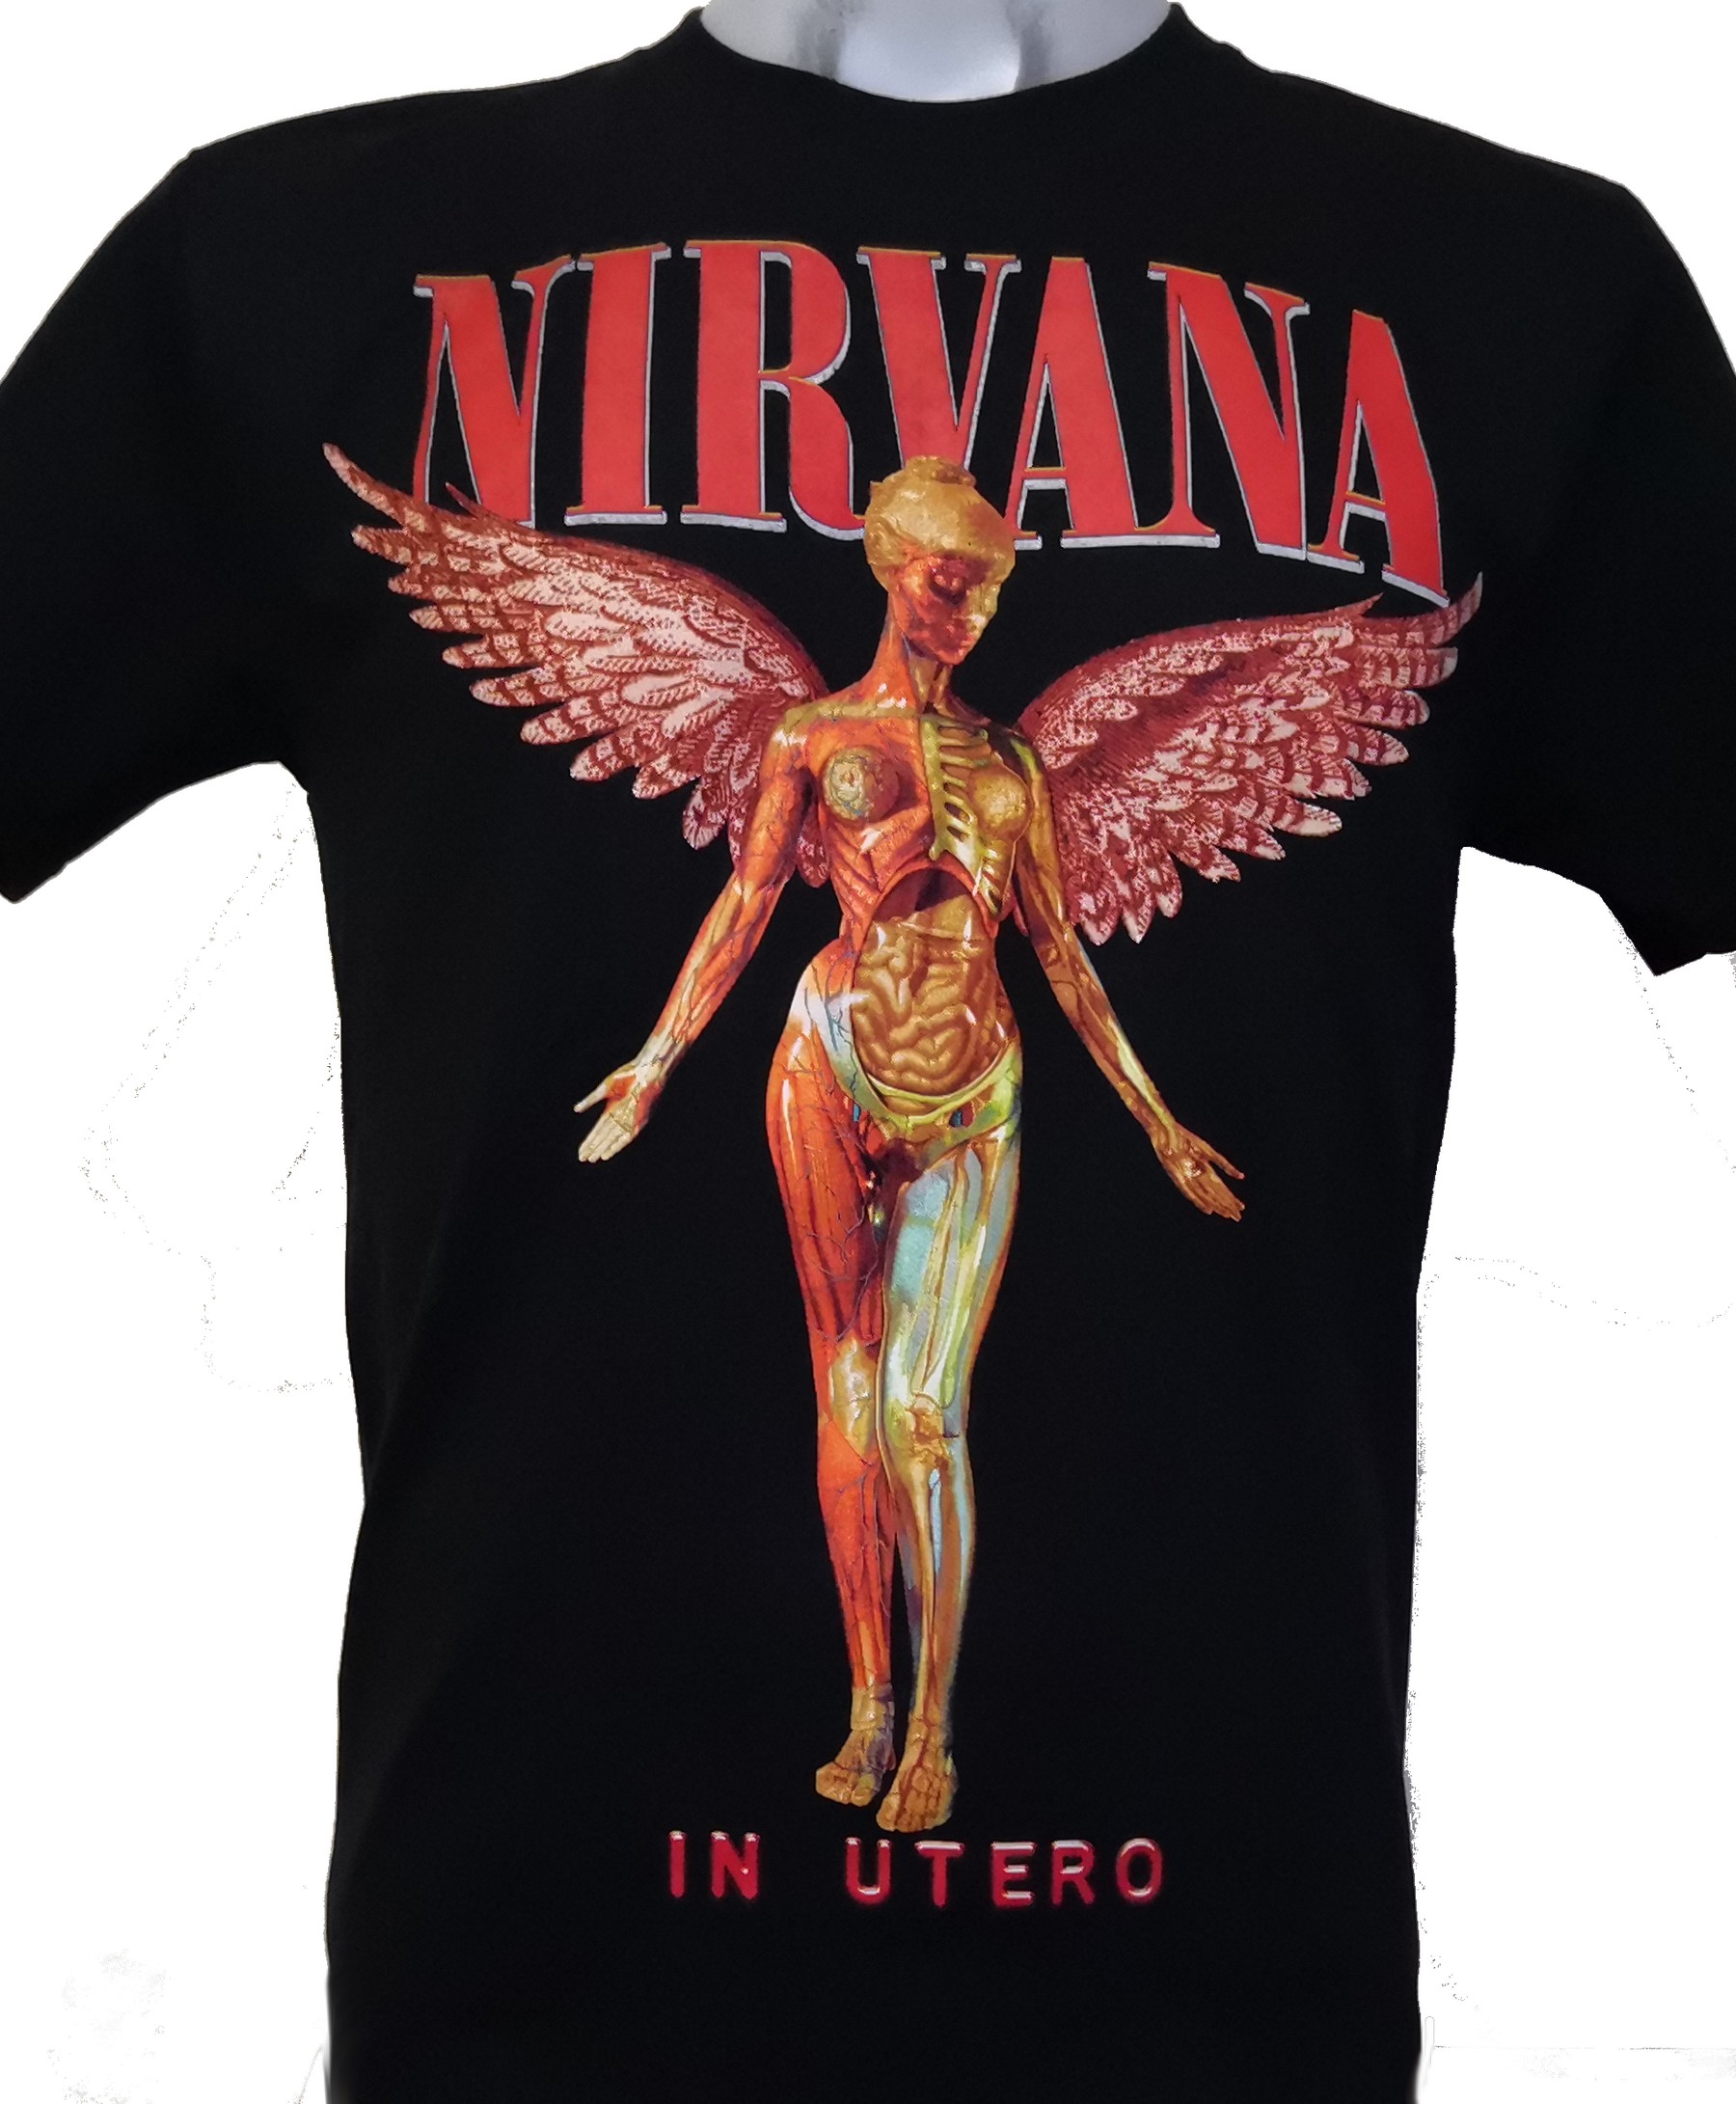 Nirvana t. Nirvana "in utero". 1993 - In utero. Nirvana in utero ангел. Футболка Nirvana in utero оригинал.